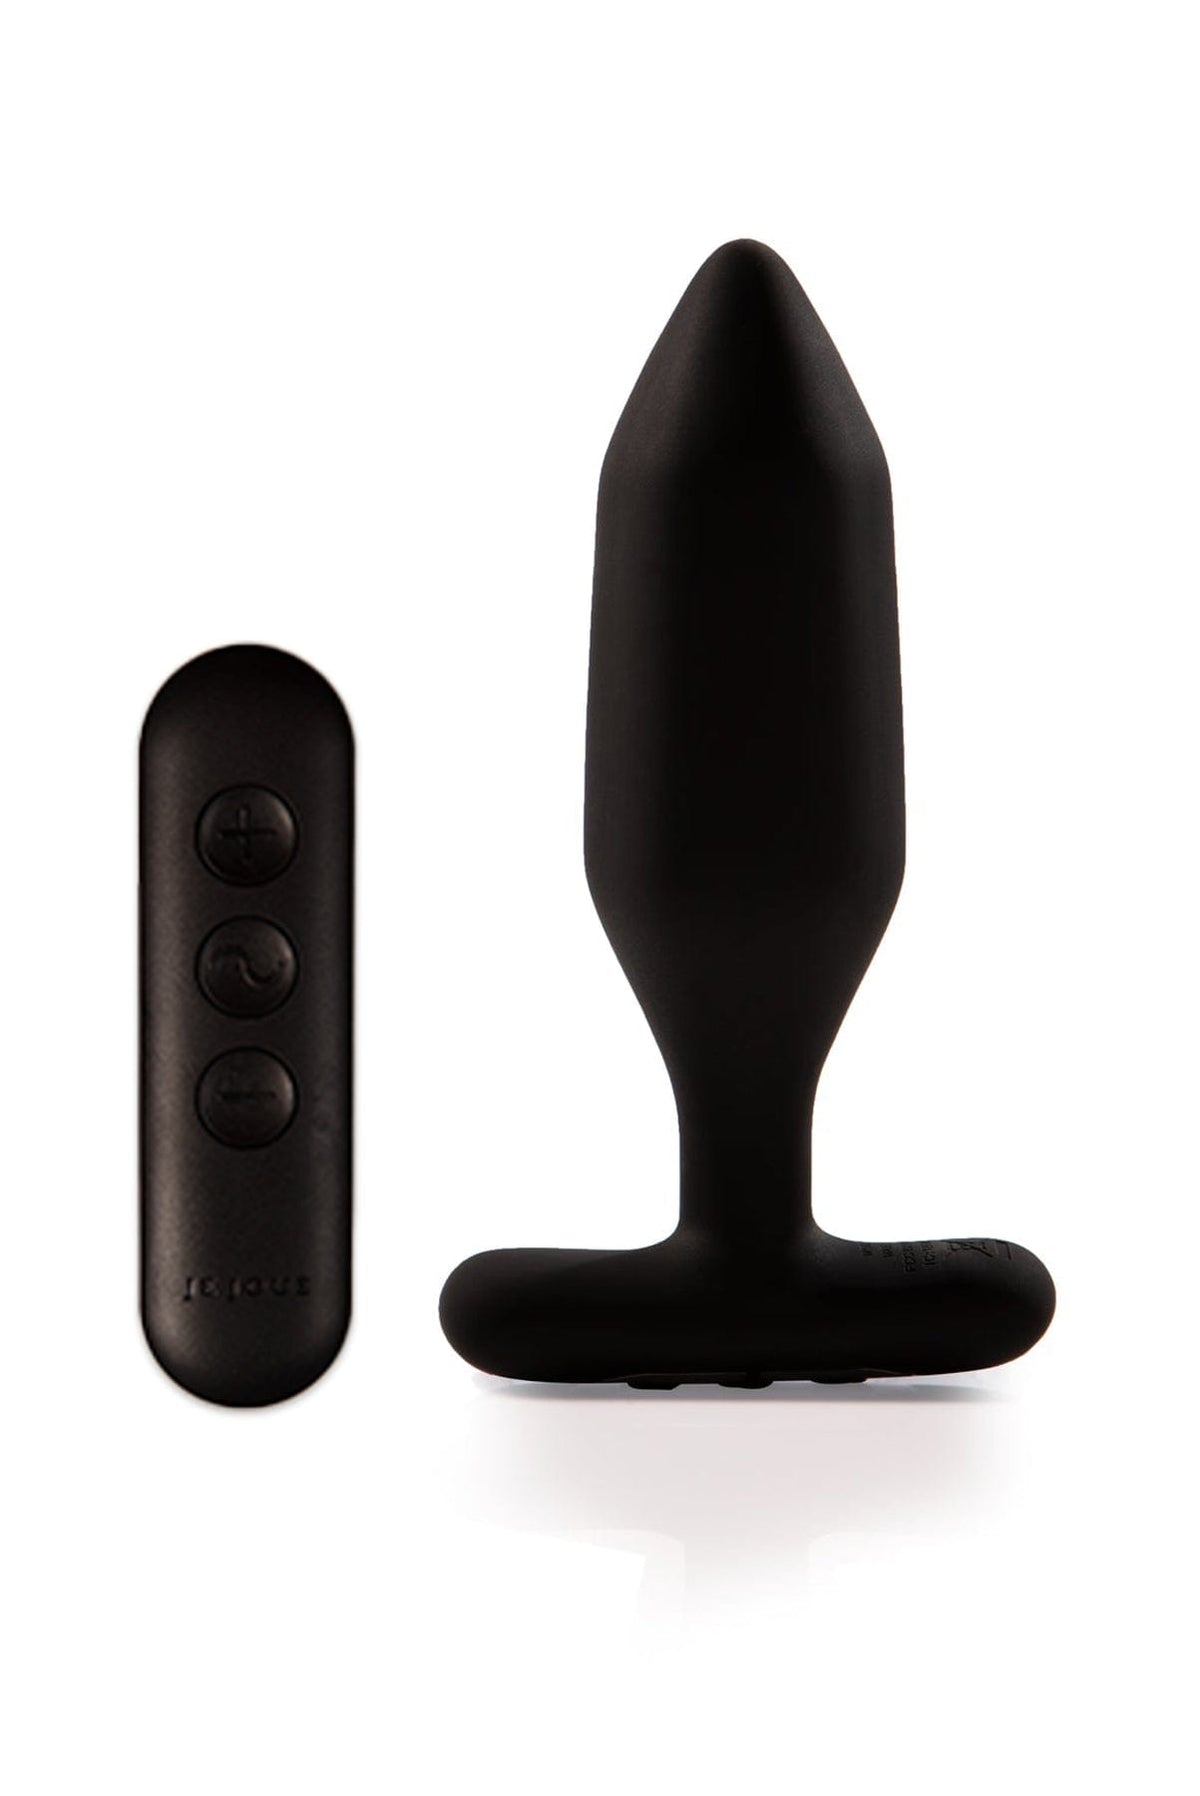 Onyx Vibrating Butt Plug - Je Joue - Black Anal Toys Je Joue   